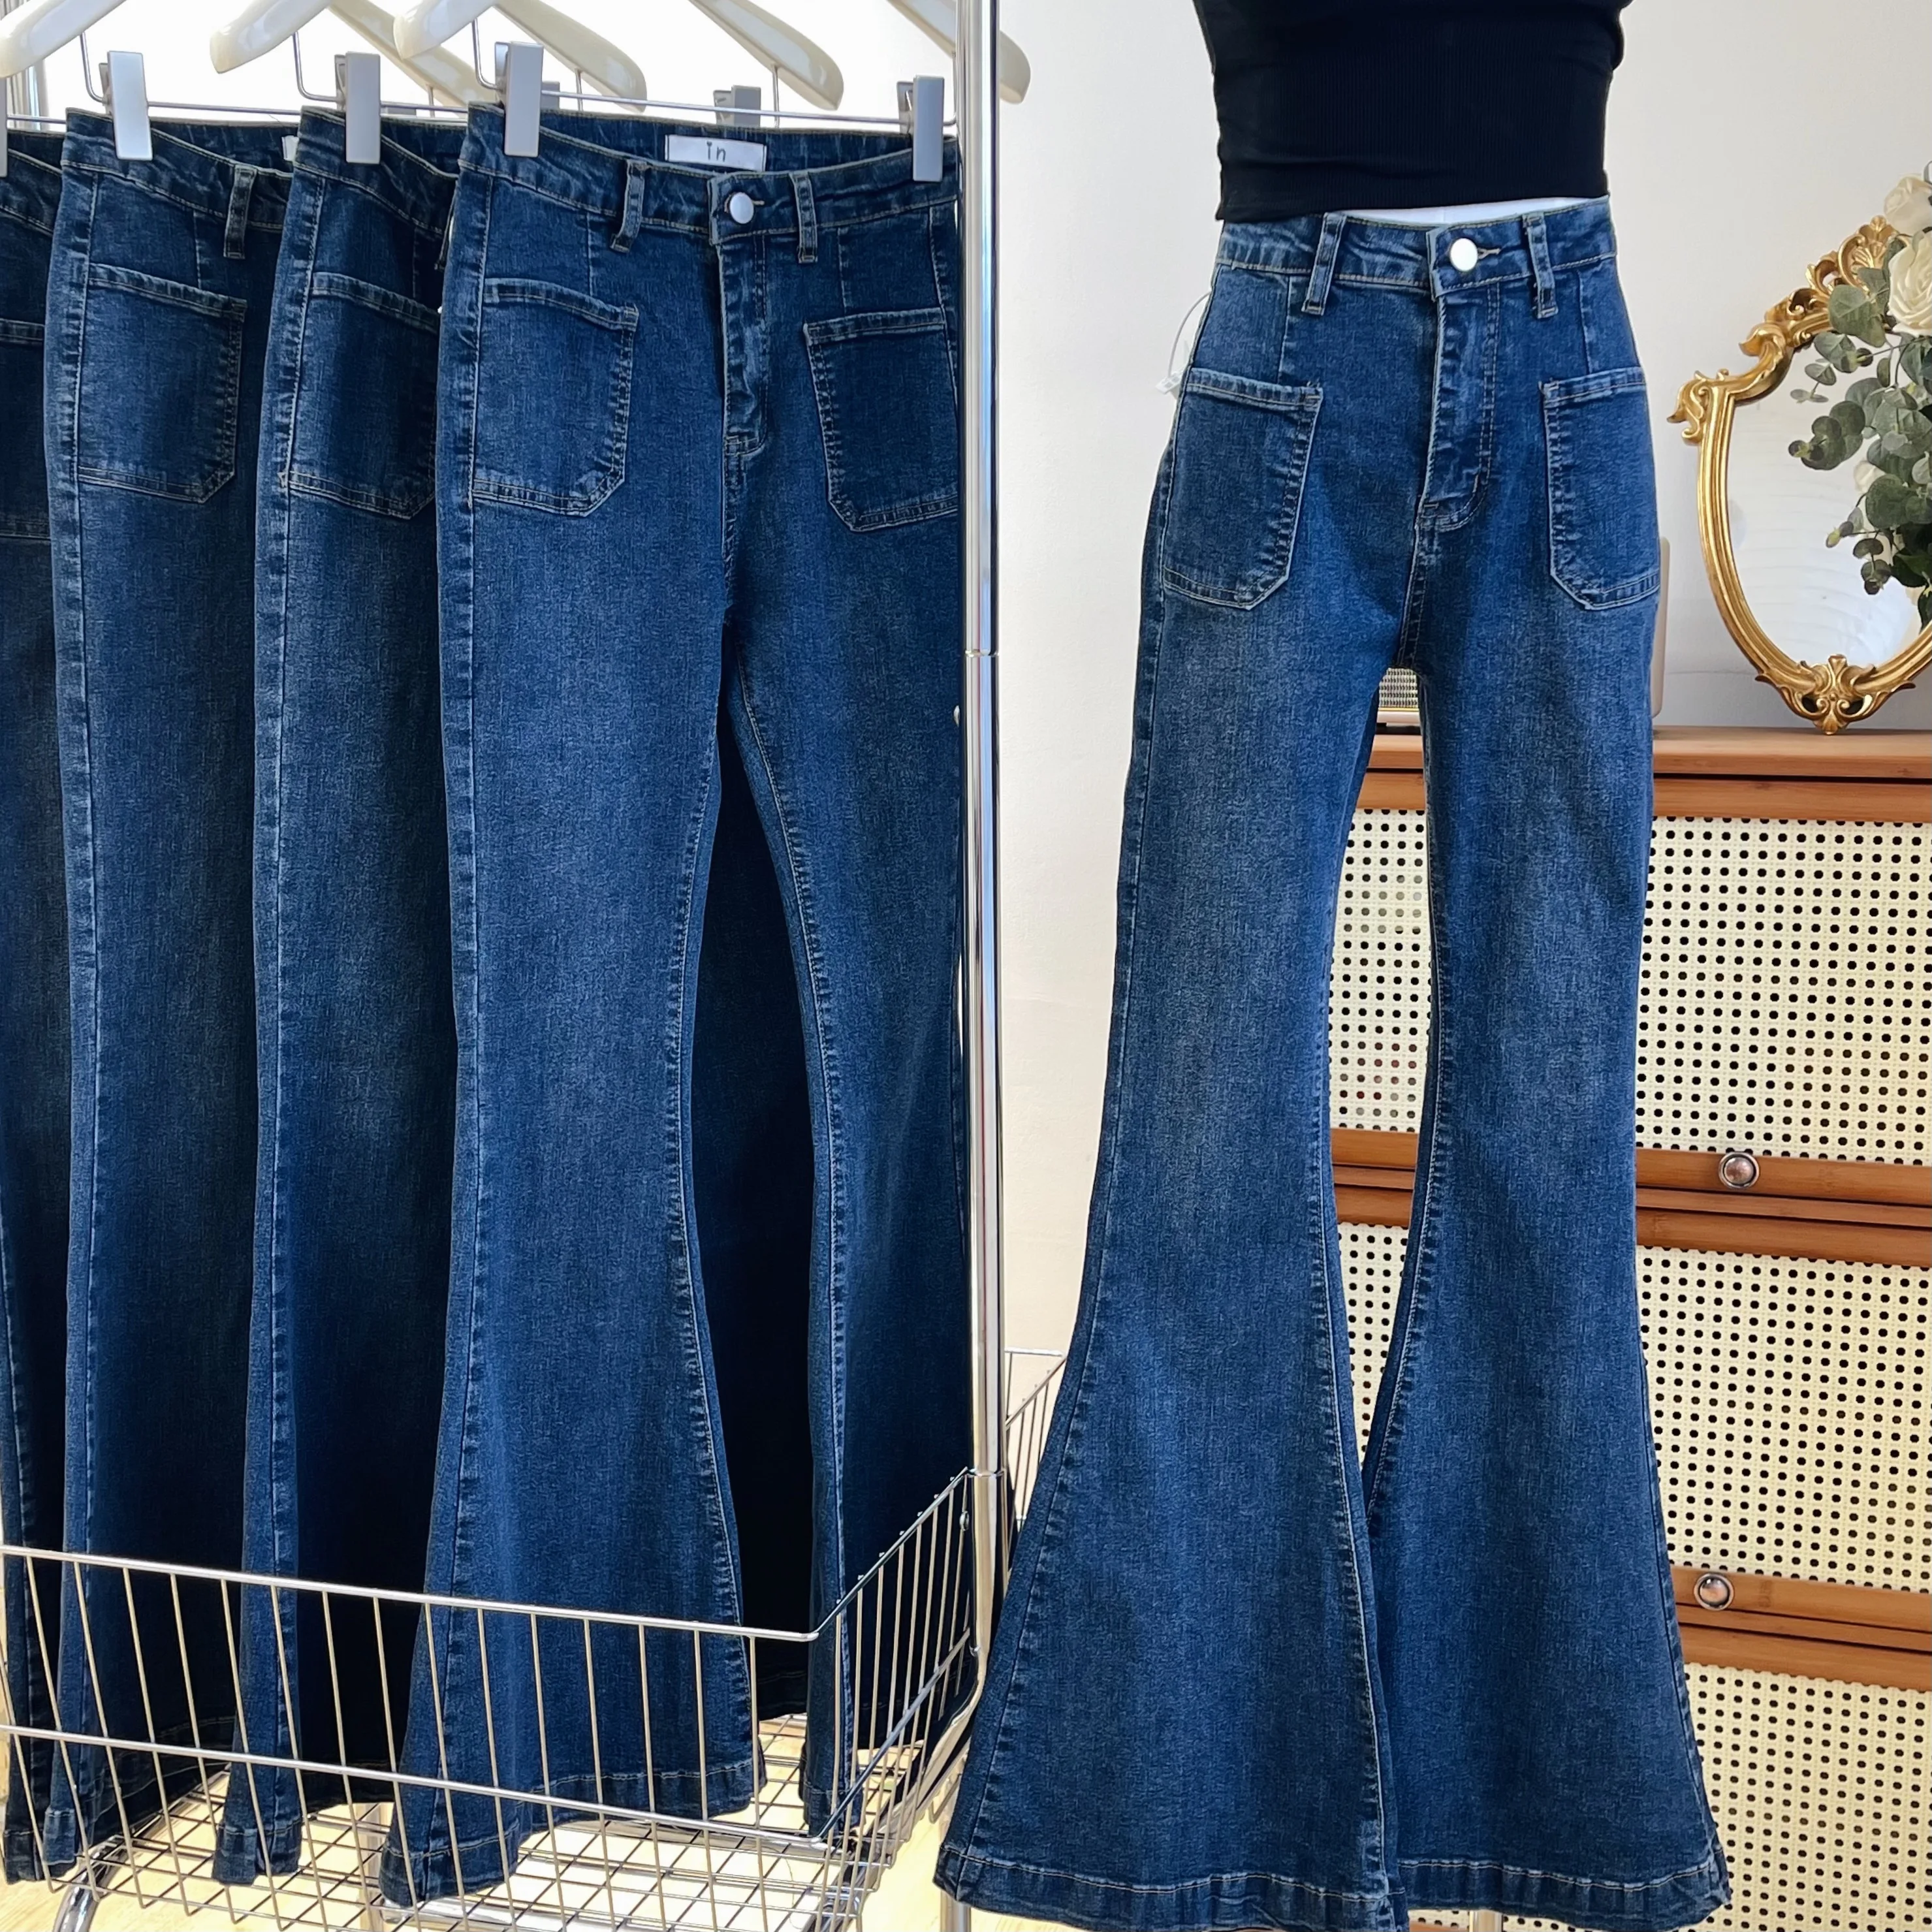 Fit For 160-173cm Women's Vintage High Waist Flare Jeans Spring Summer Stretchable Slim Flare Denim Pants Lady Leggy Long Jeans